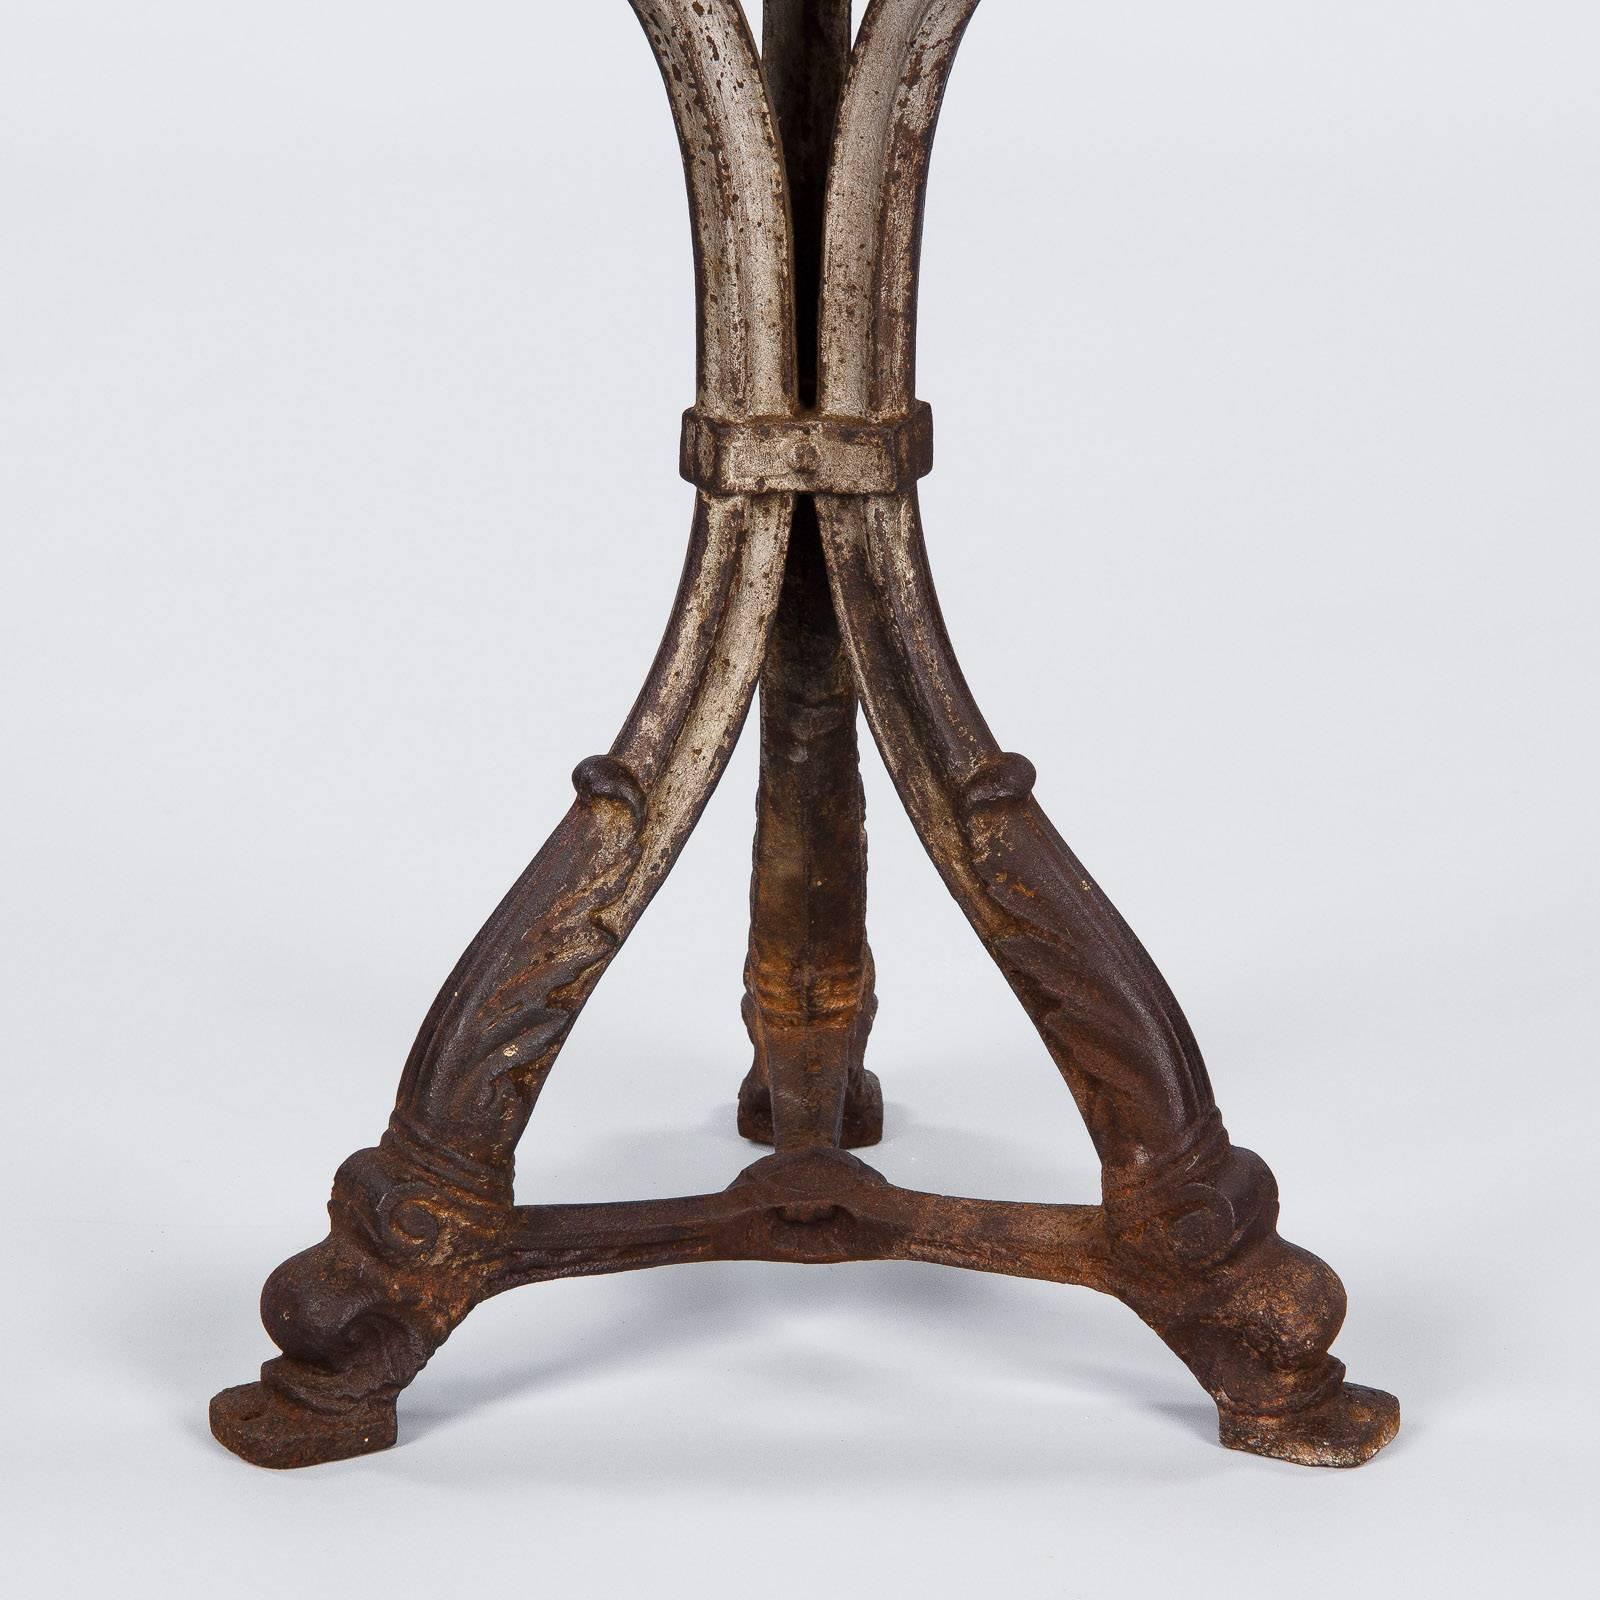 Wrought Iron French Art Nouveau Period Iron Pedestal Table with Concrete Top, 1910s